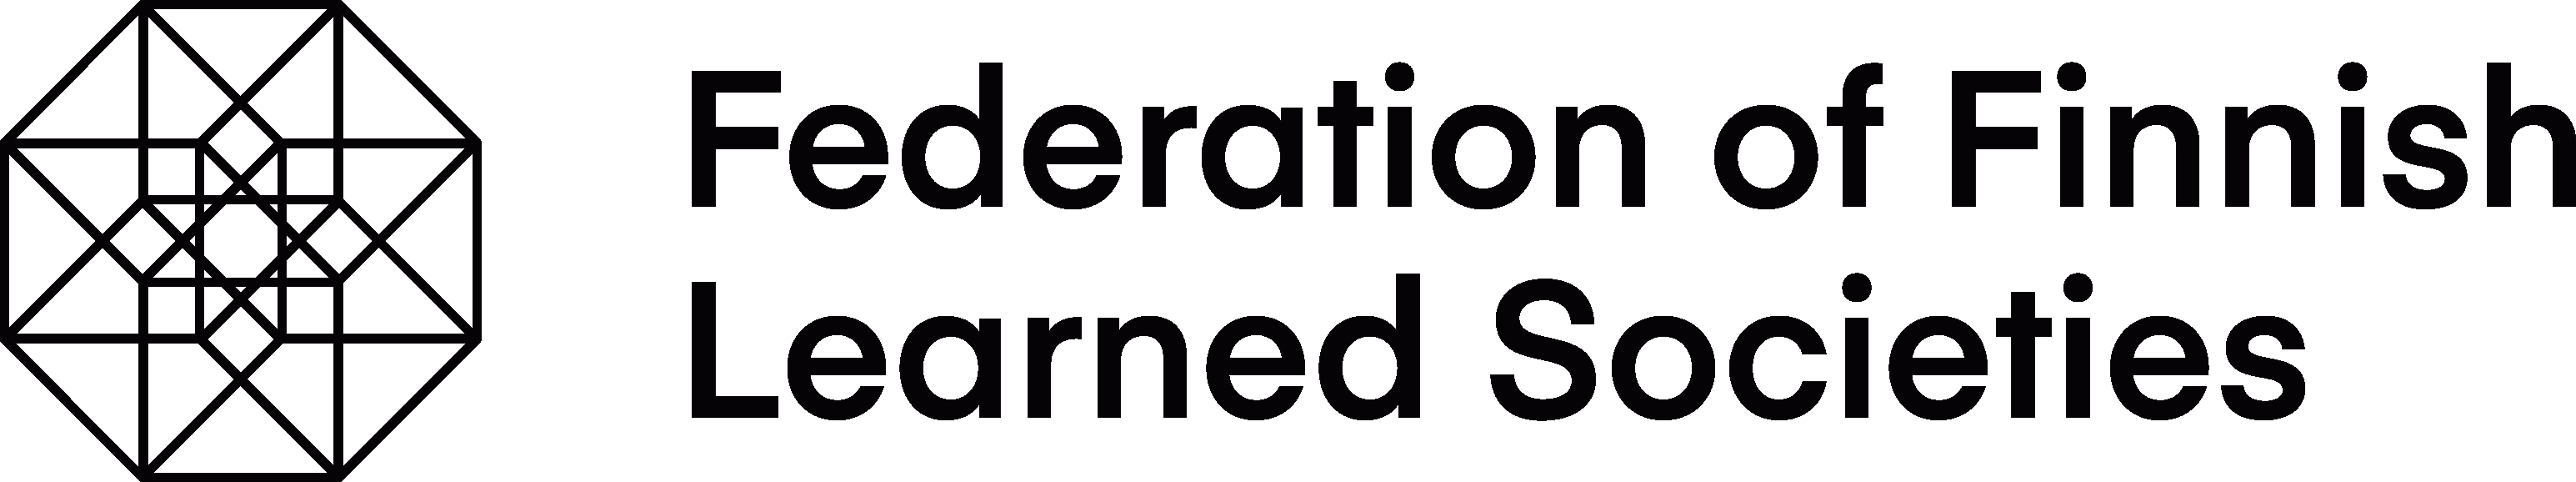 Federation of Finnish Learned Societies logo.